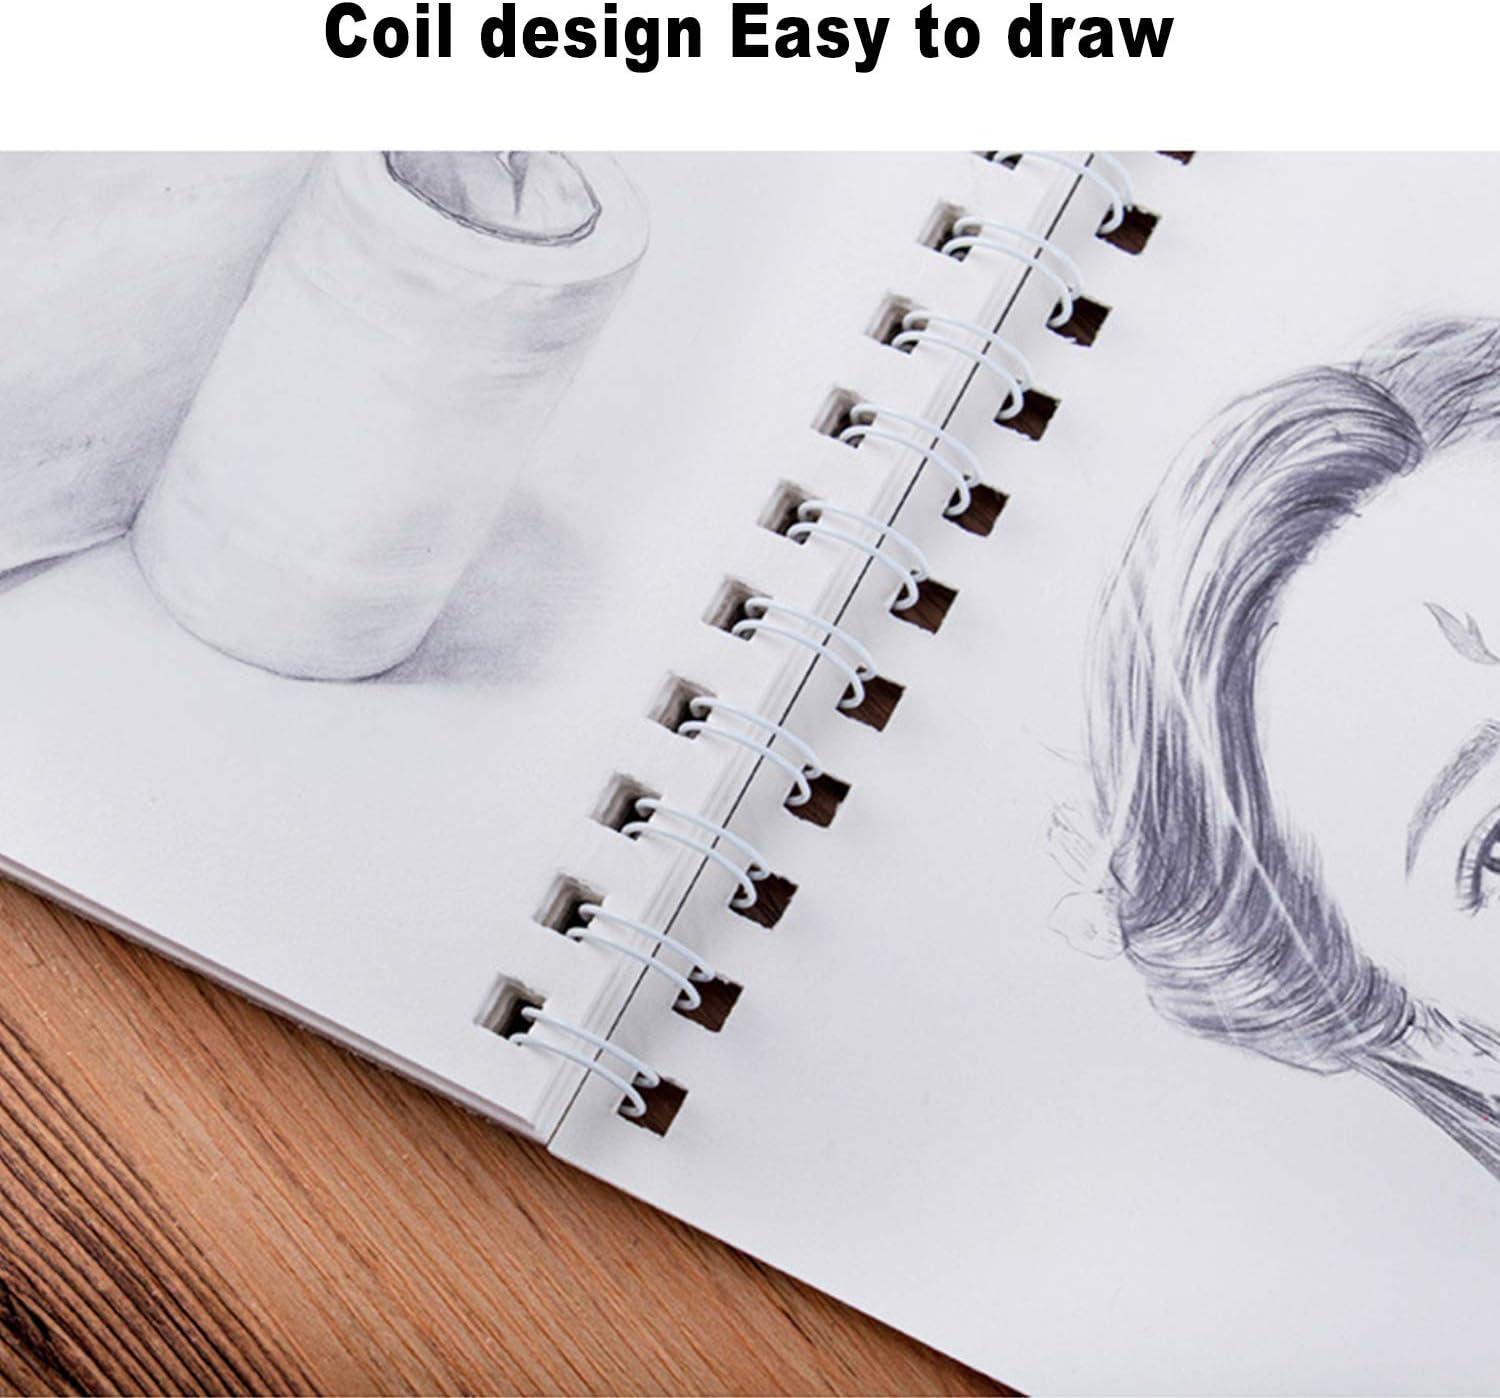 A4 Sketch pad book flip up drawing art creative fun white paper